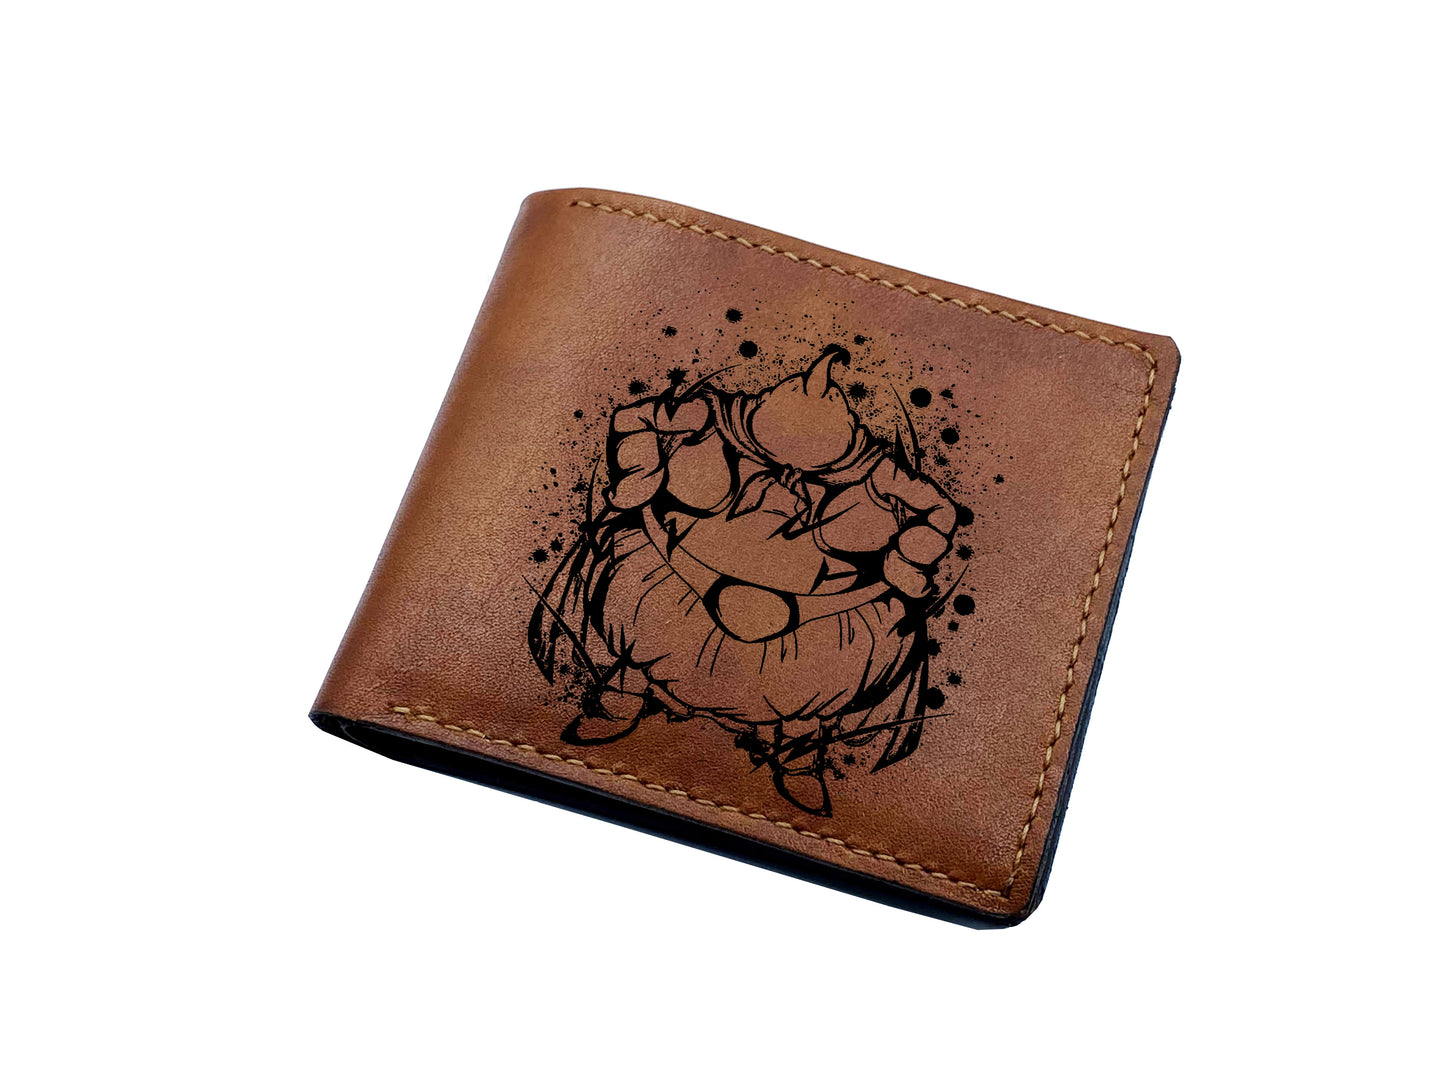 Mayan Corner - Personalized dragon ball leather wallet, Jiren super warrior art wallet, dragon ball leather gift ideas for men